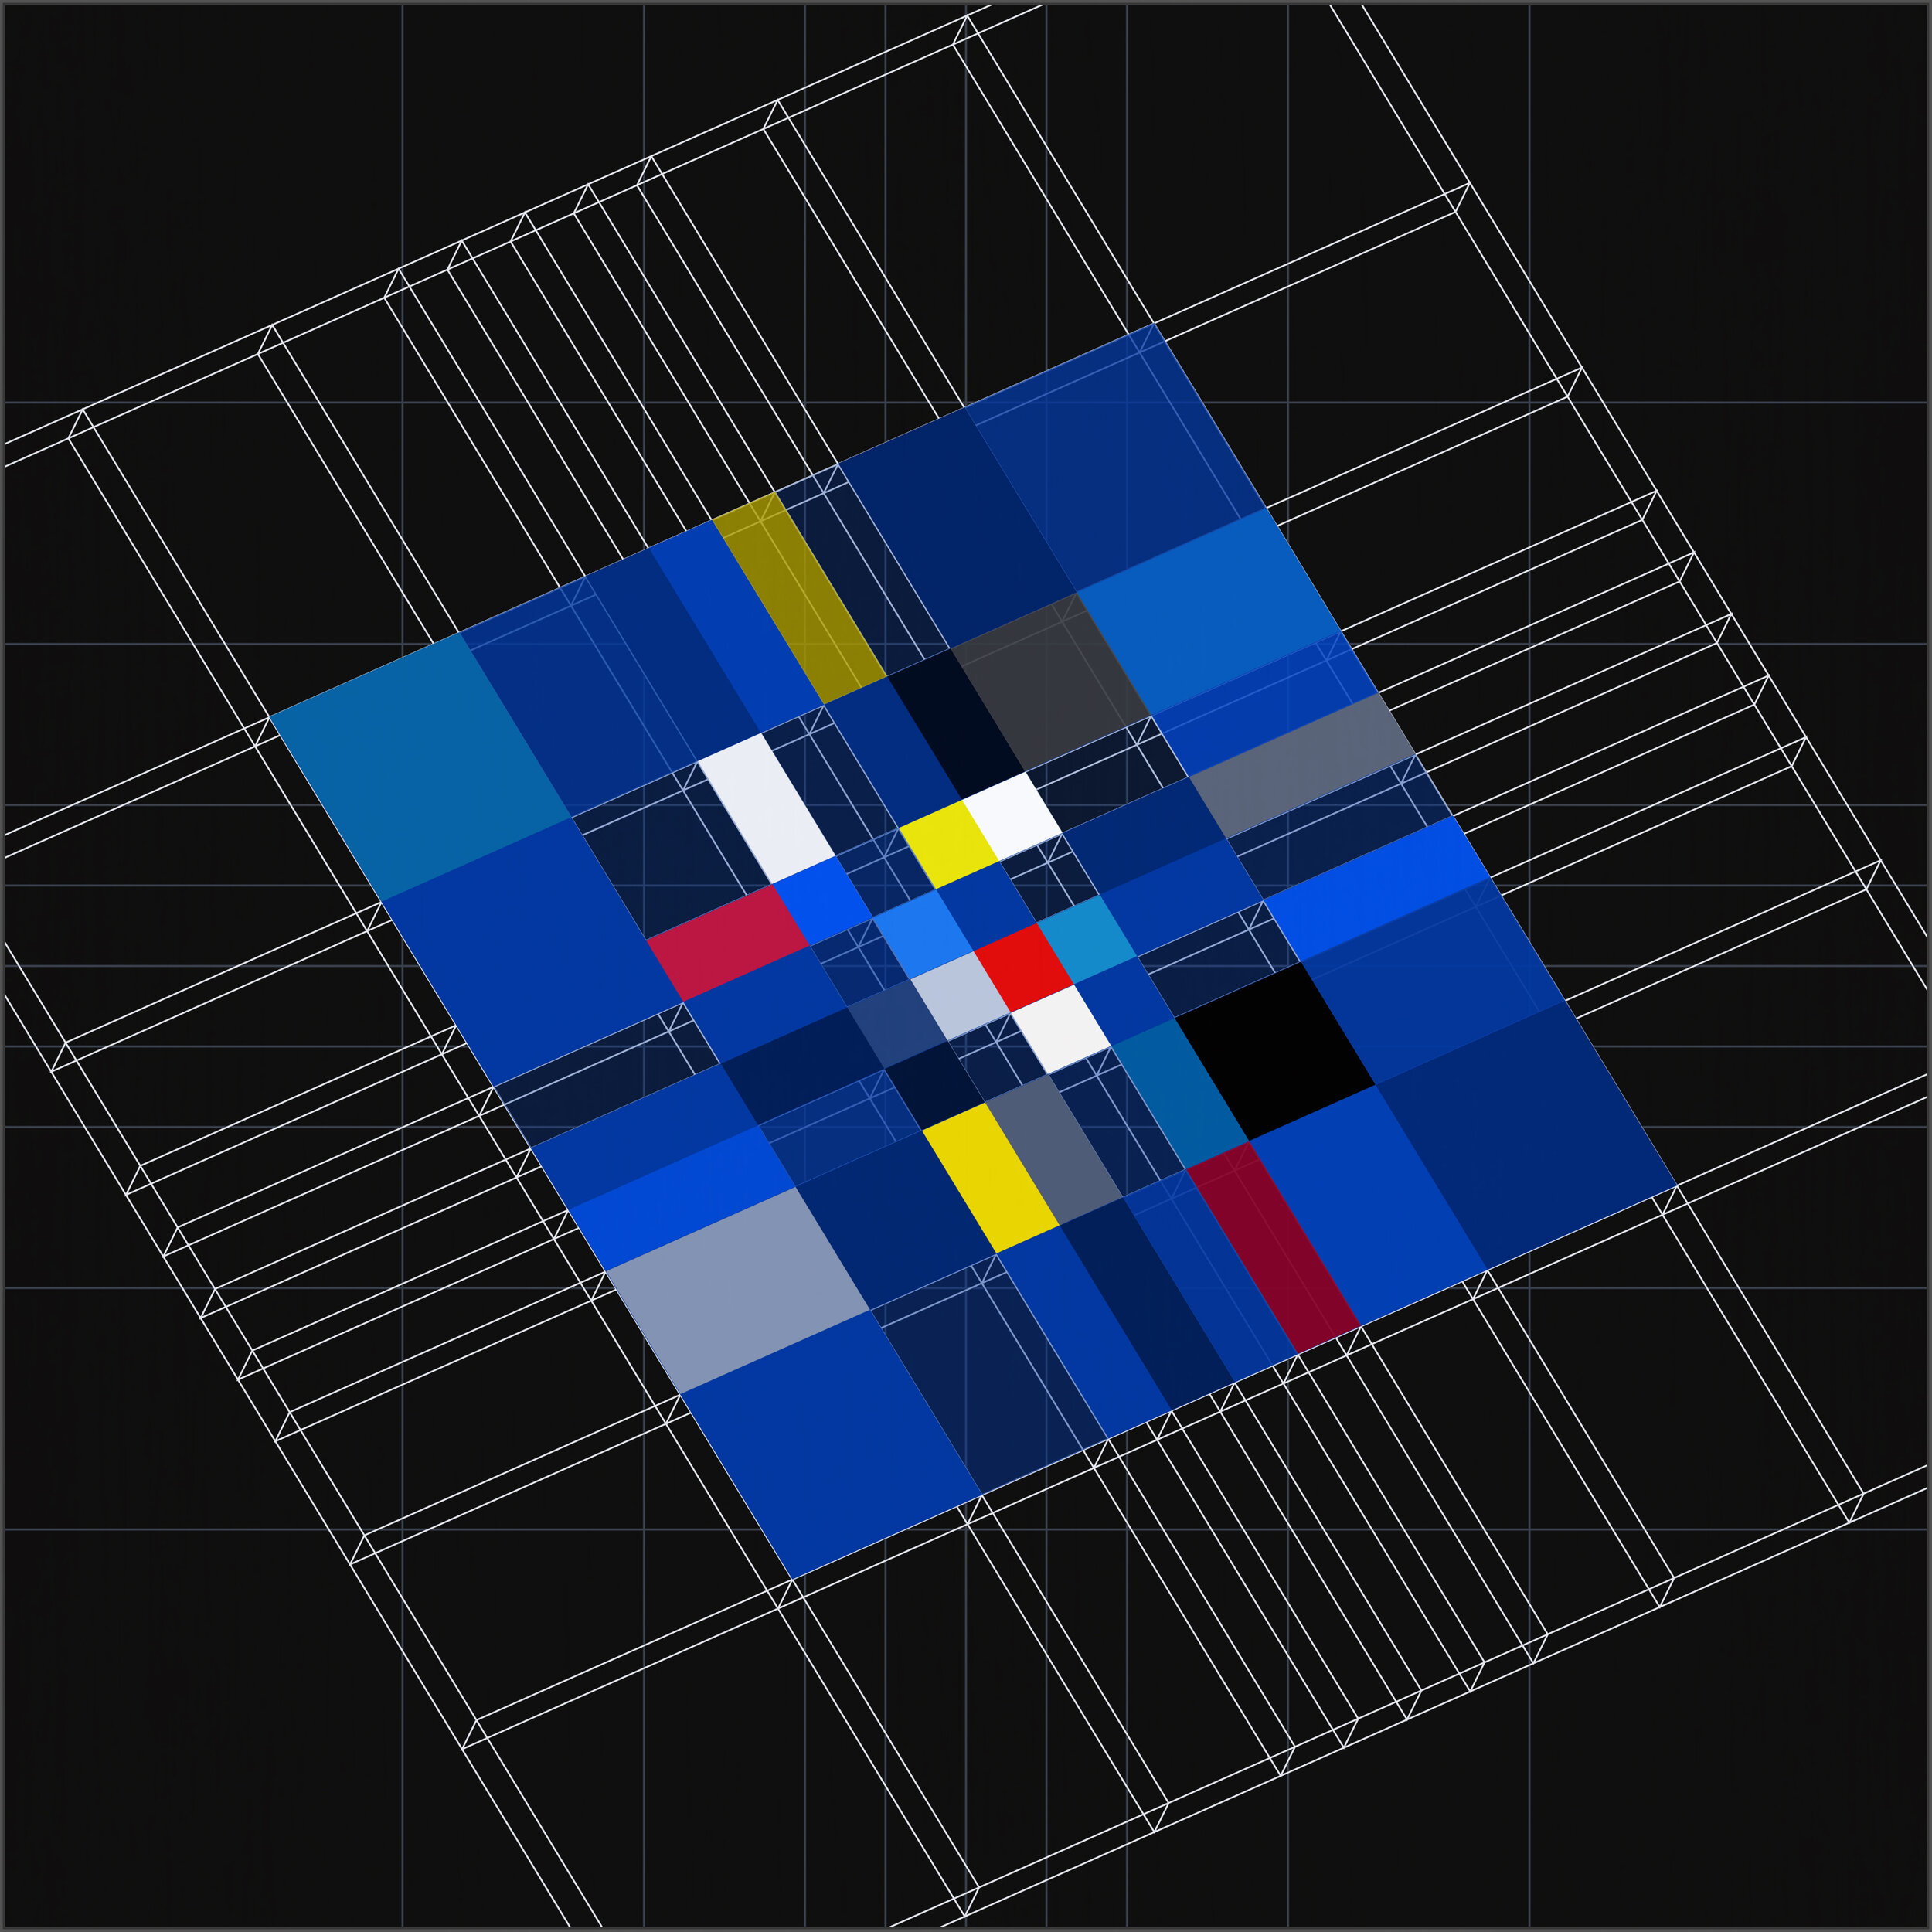 Fibonacci-sequence-space [20200503] [Blue+Colors], acrylic on canvas